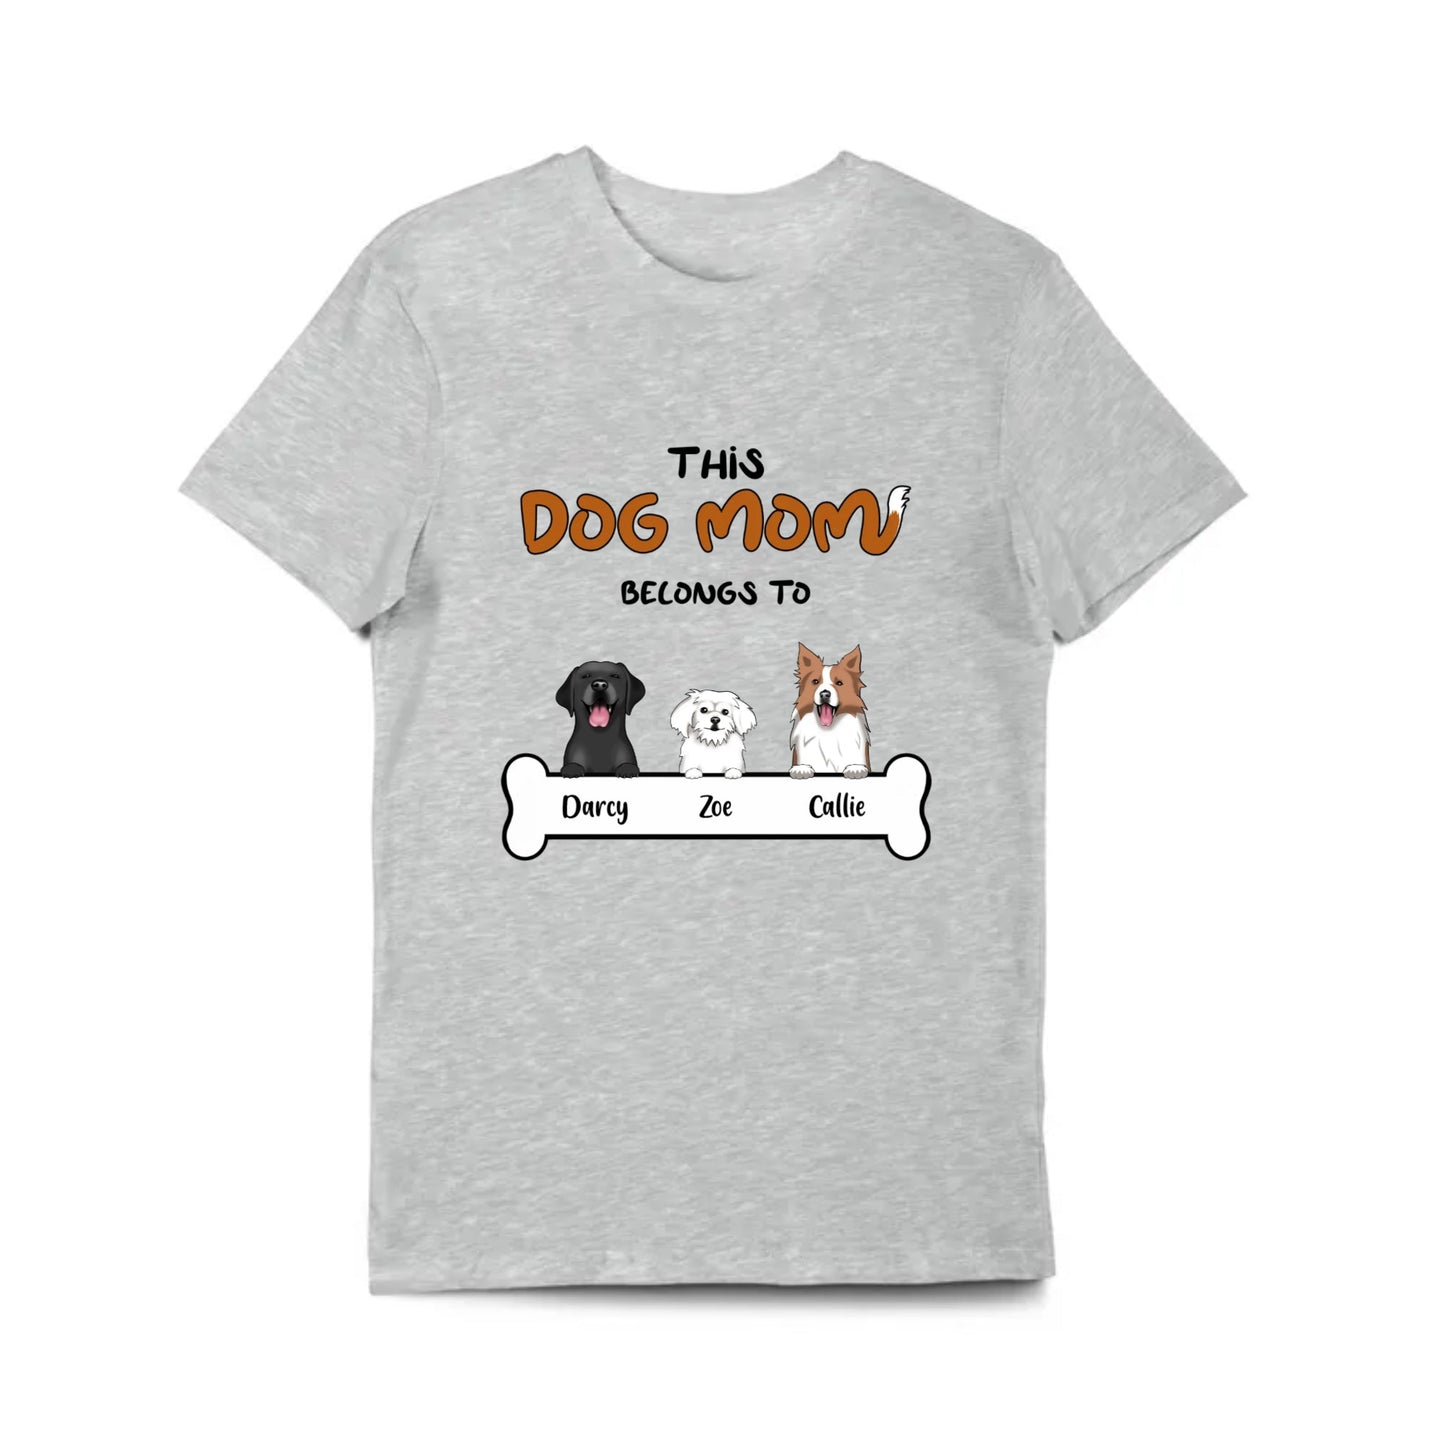 Personalized Dog Mom Shirt - G500 5.3 oz. T-Shirt